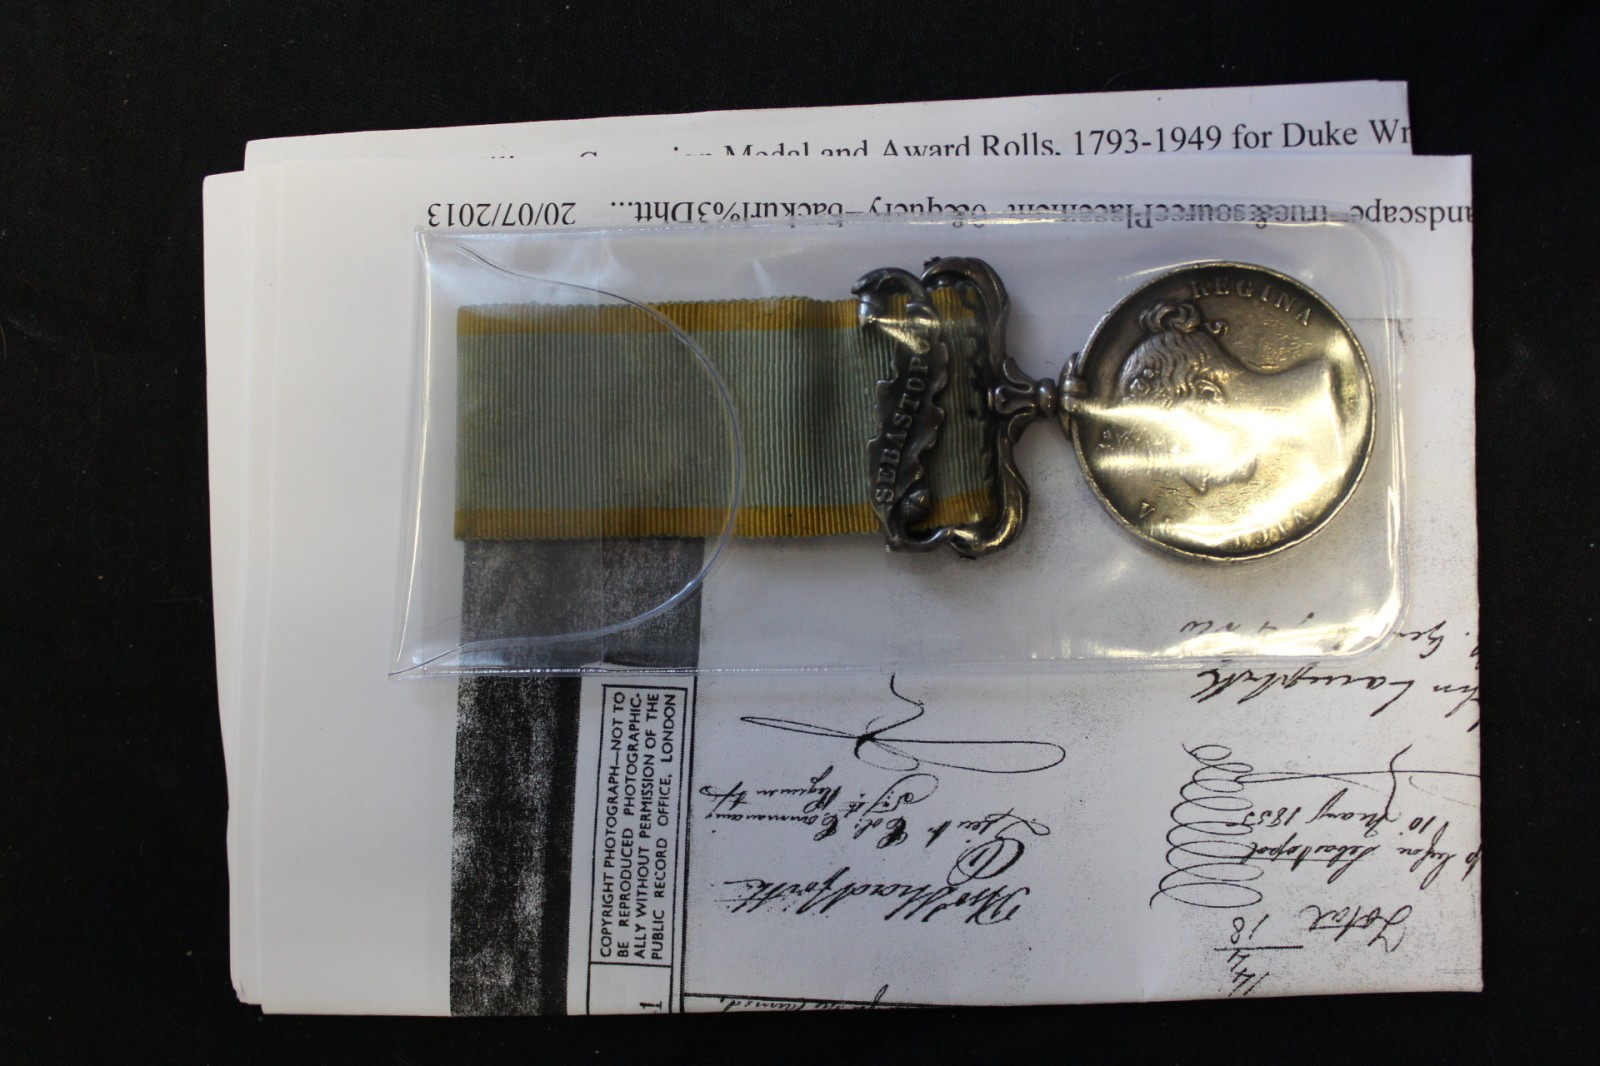 Crimea Medal with Sebastopol clasp engraved to Duke W Furnell. (2207 Cpl Duke William Furnell 57th